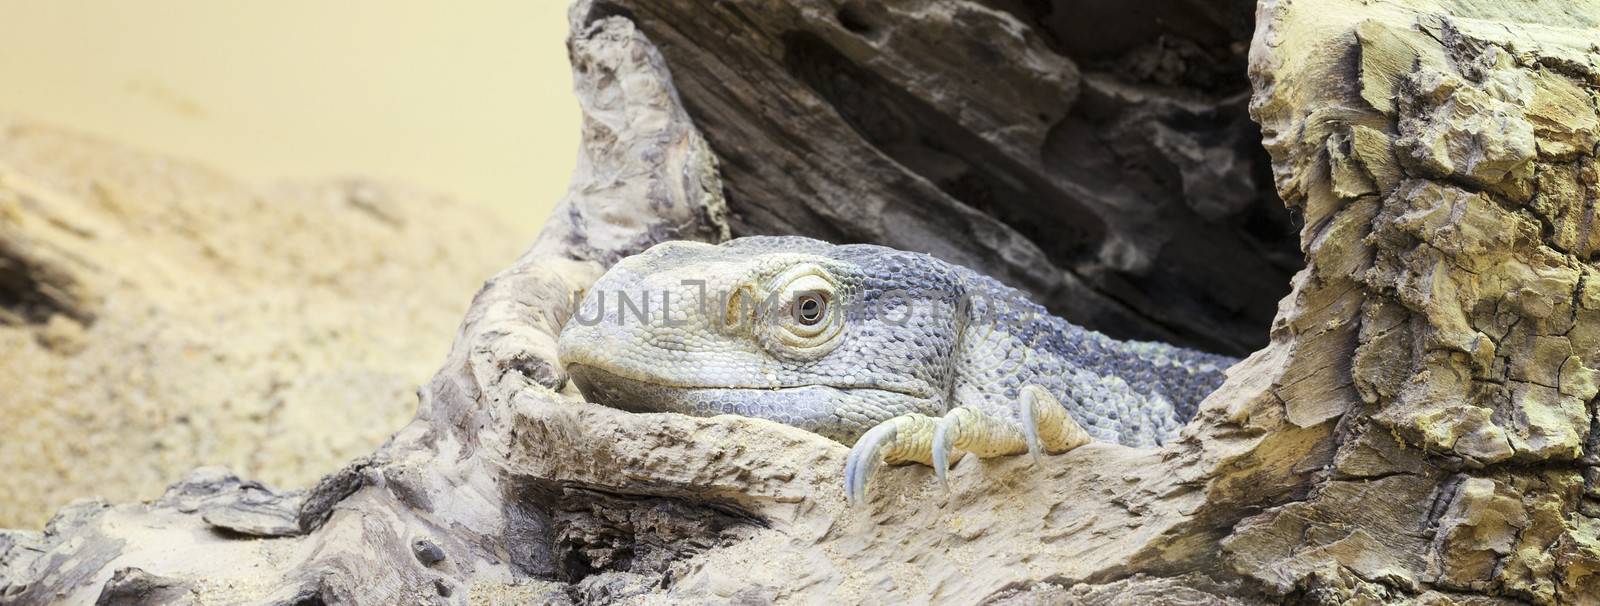 resting iguana by vwalakte